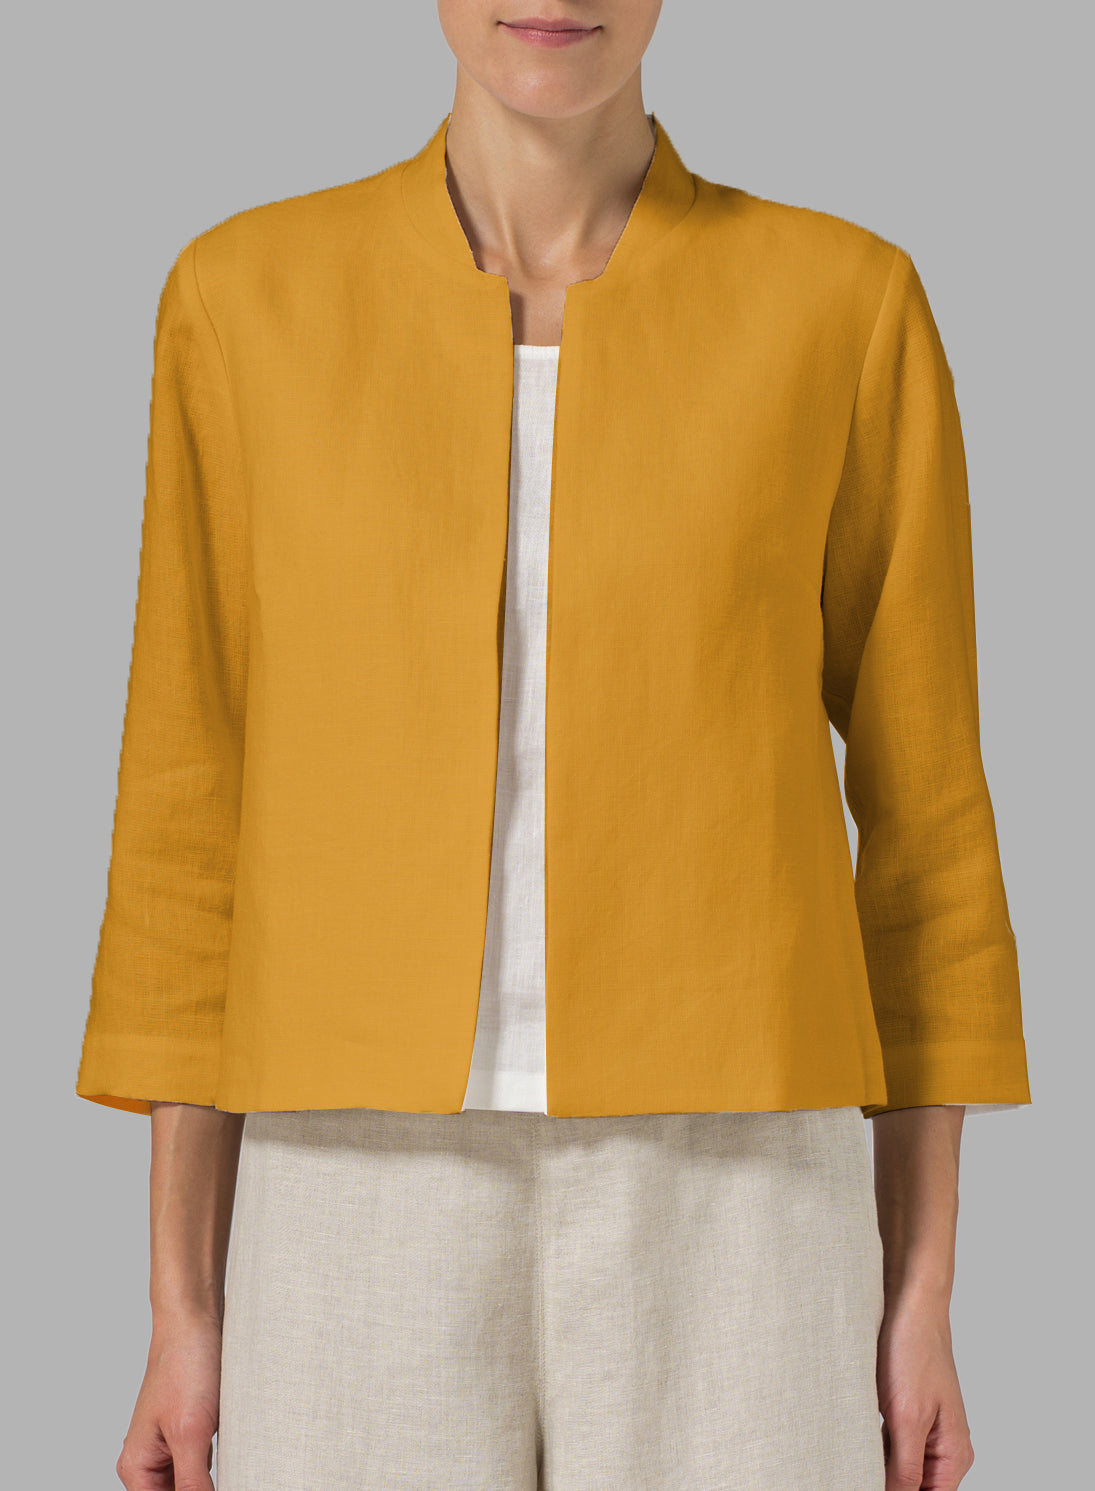 Cotton And Linen Waist Slim Fashion Short Jacket